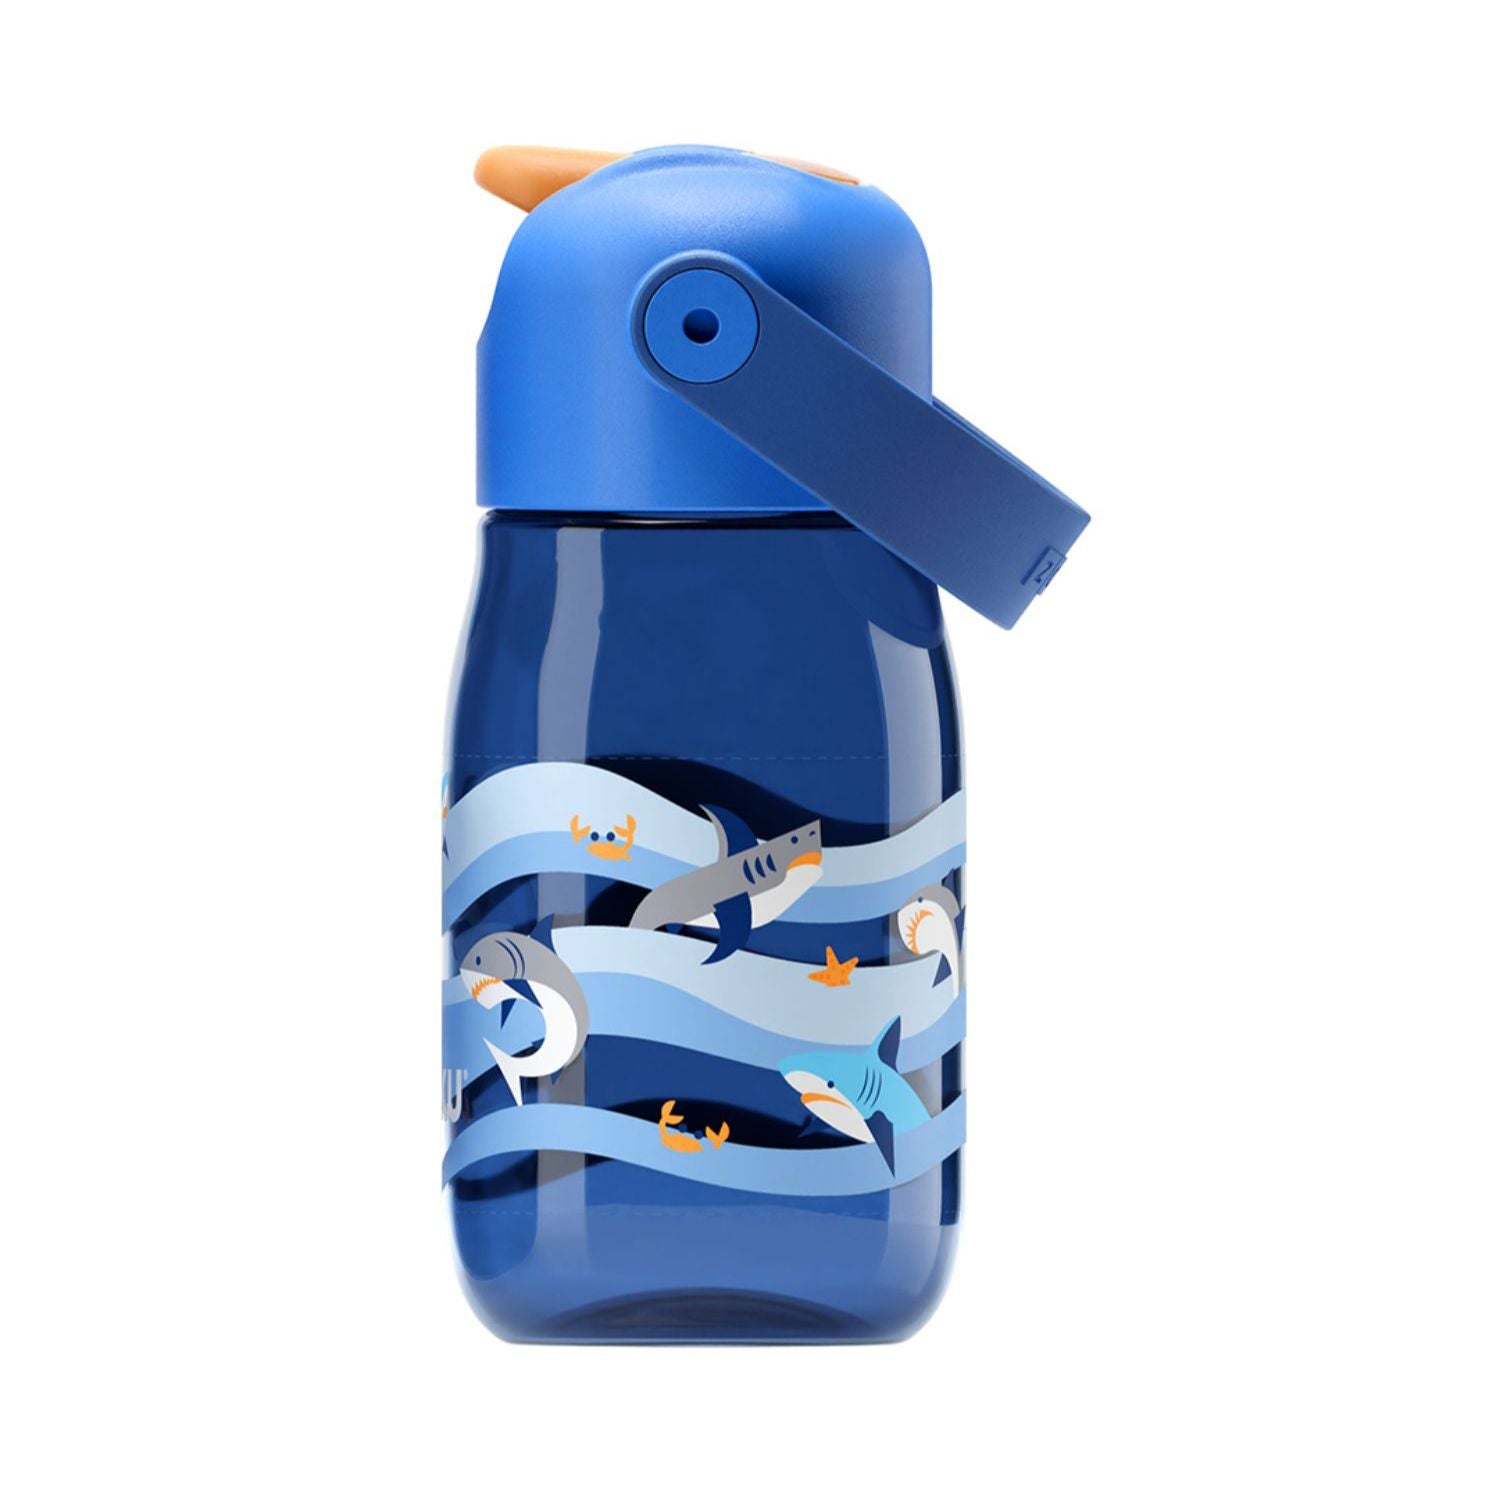 Zoku Blue Shark Flip Straw Kids Bottle, 400ml - Blue